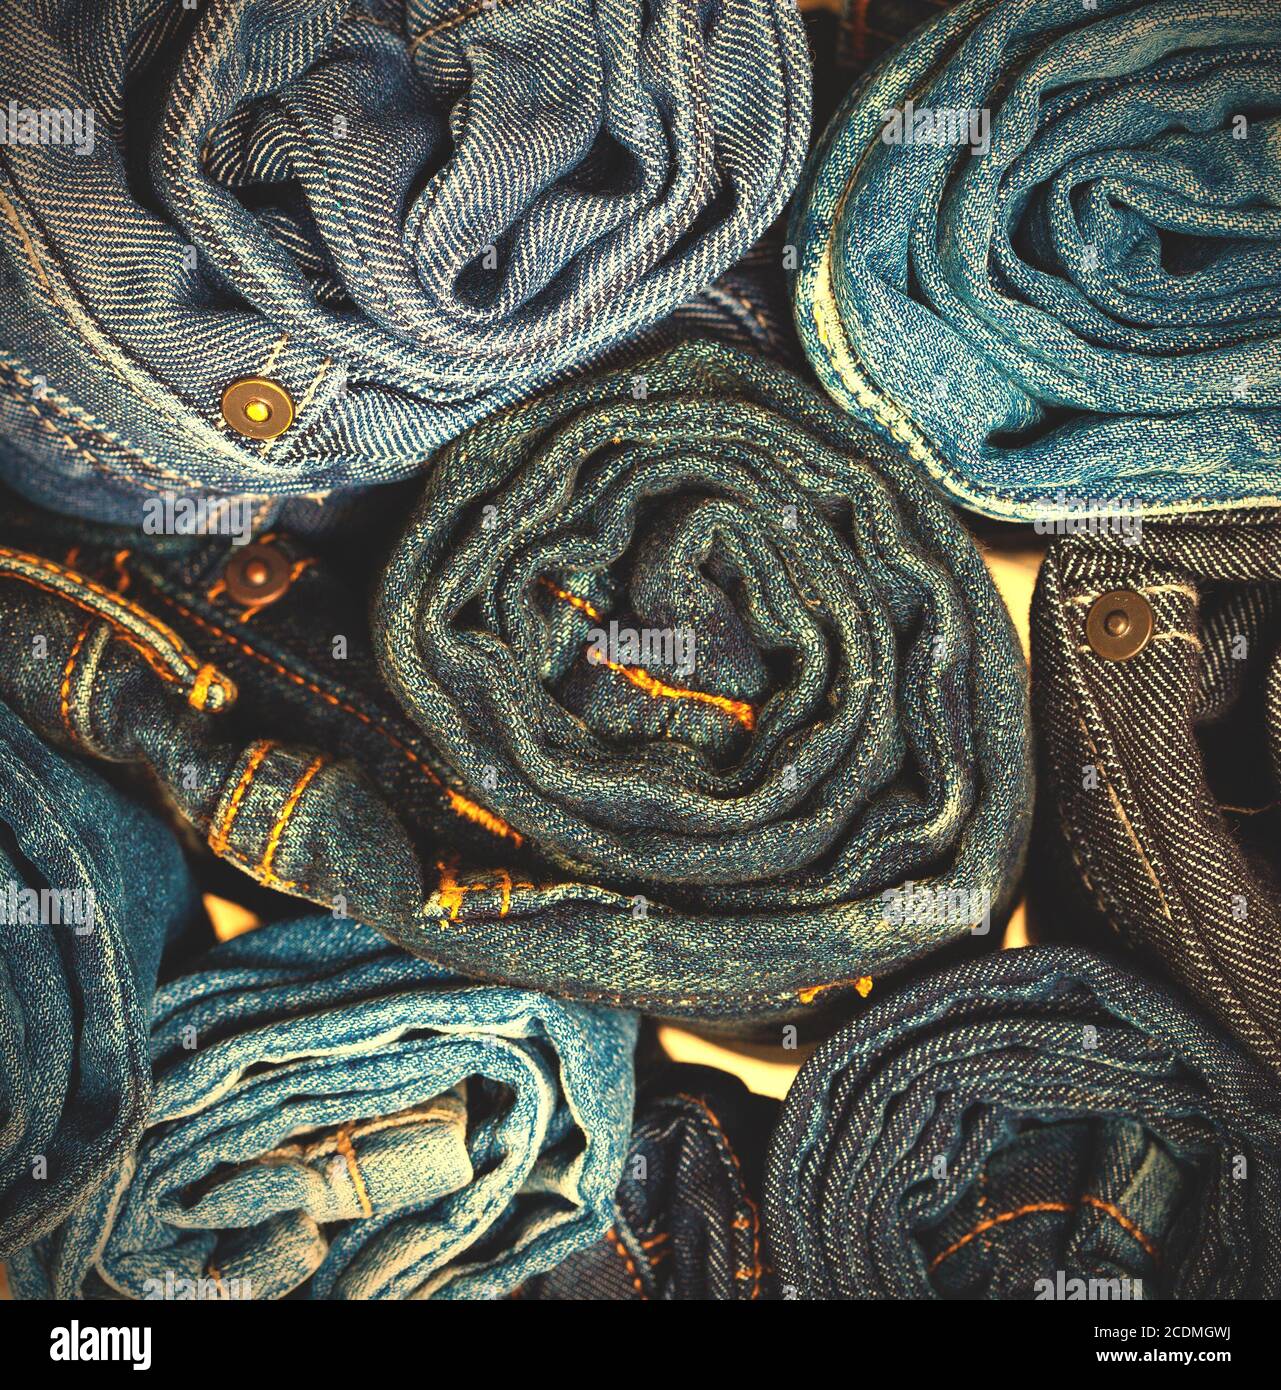 Jeans-Hosen-stack Stockfoto